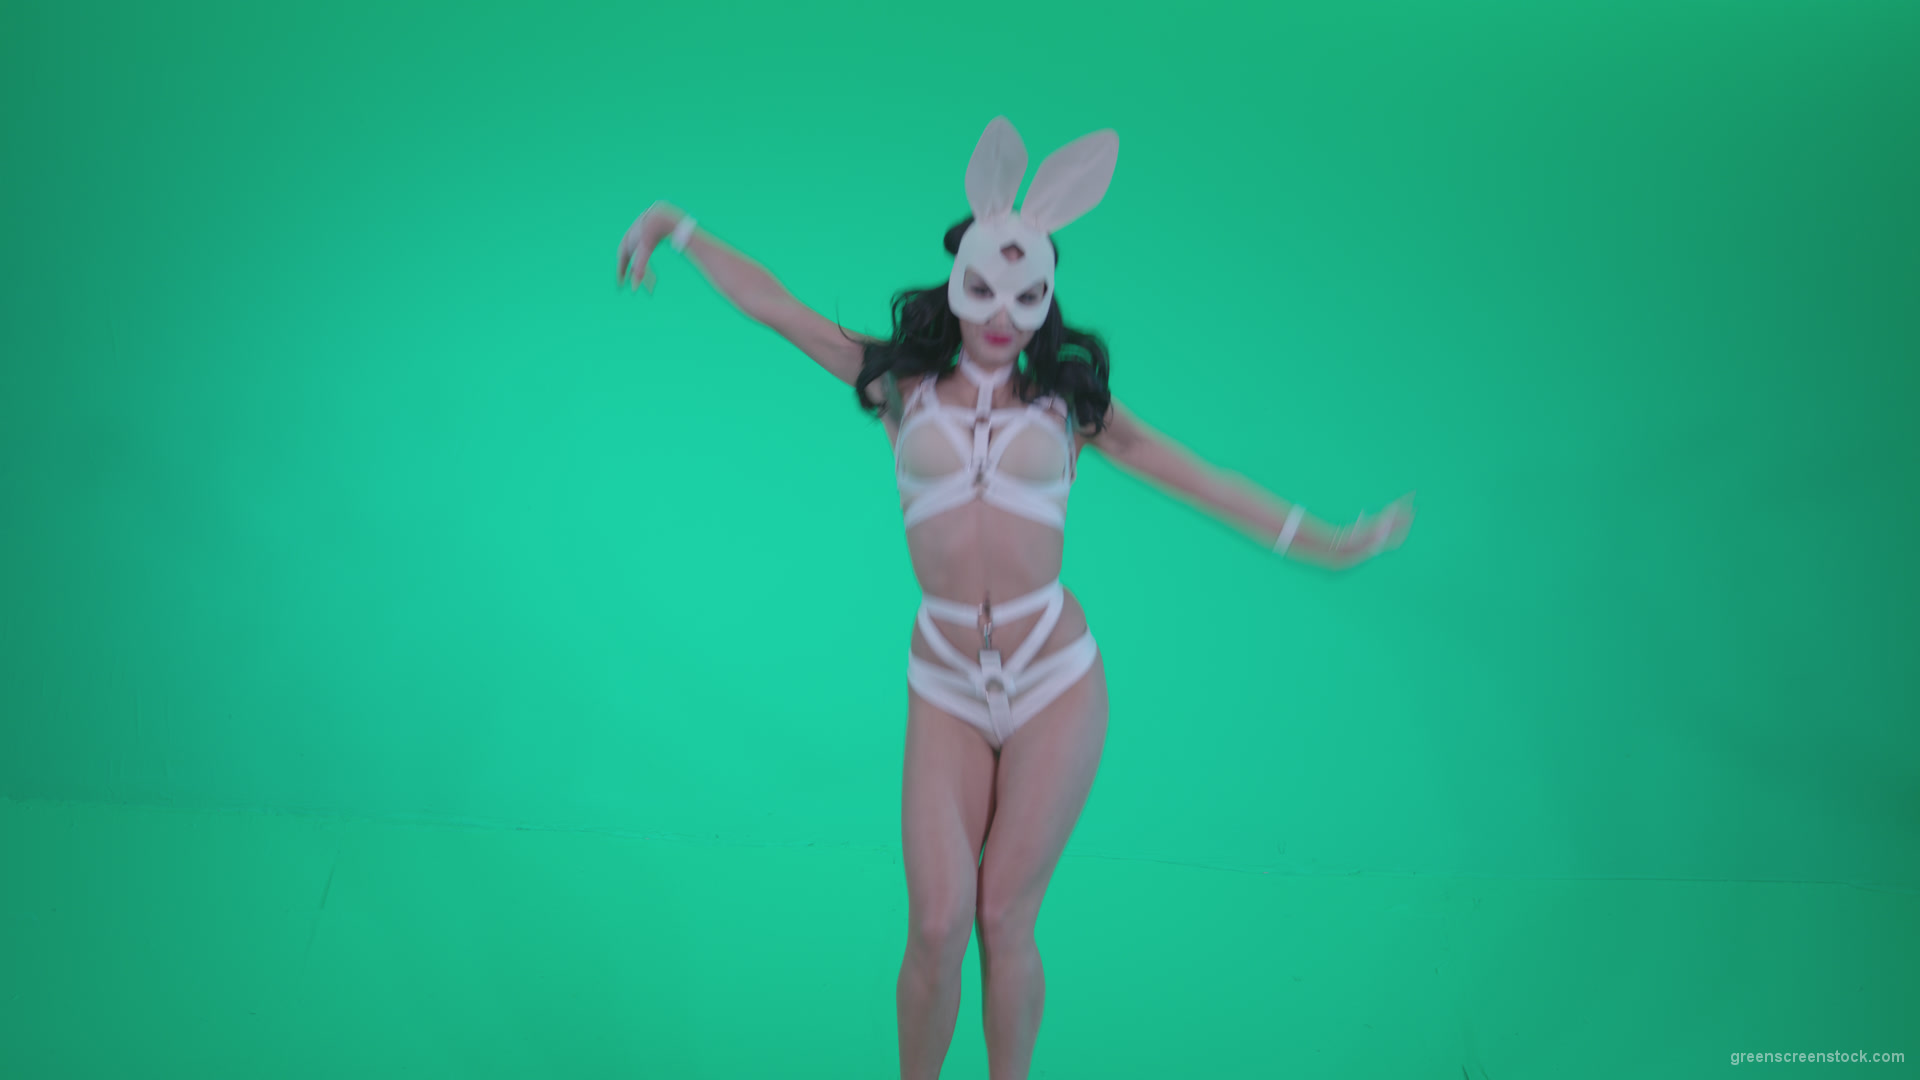 Go-go-Dancer-White-Rabbit-m9-Green-Screen-Video-Footage_007 Green Screen Stock